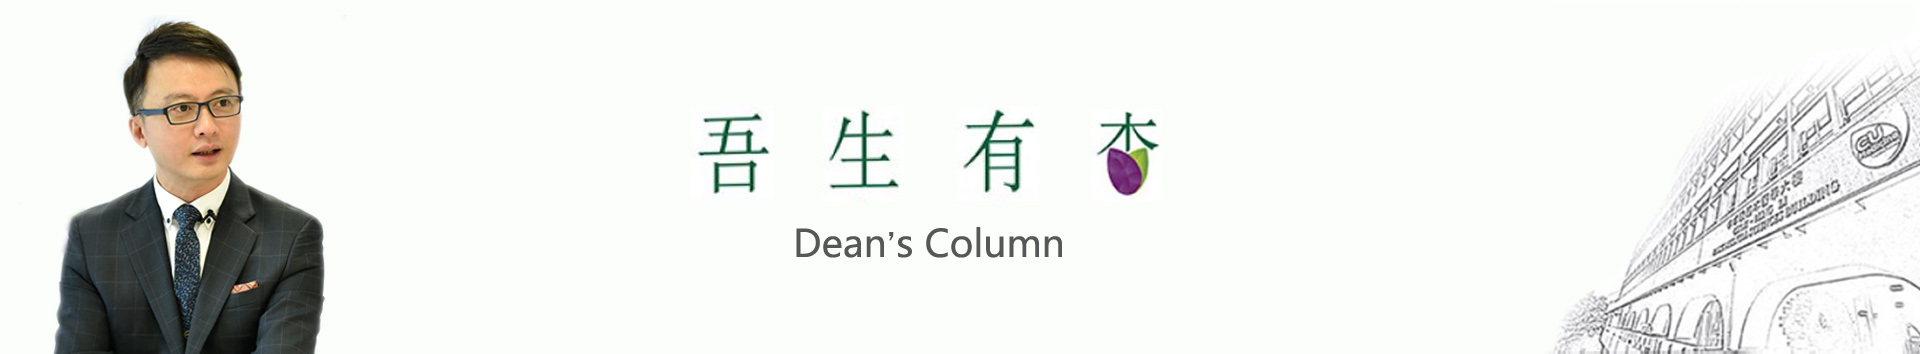 deans-column